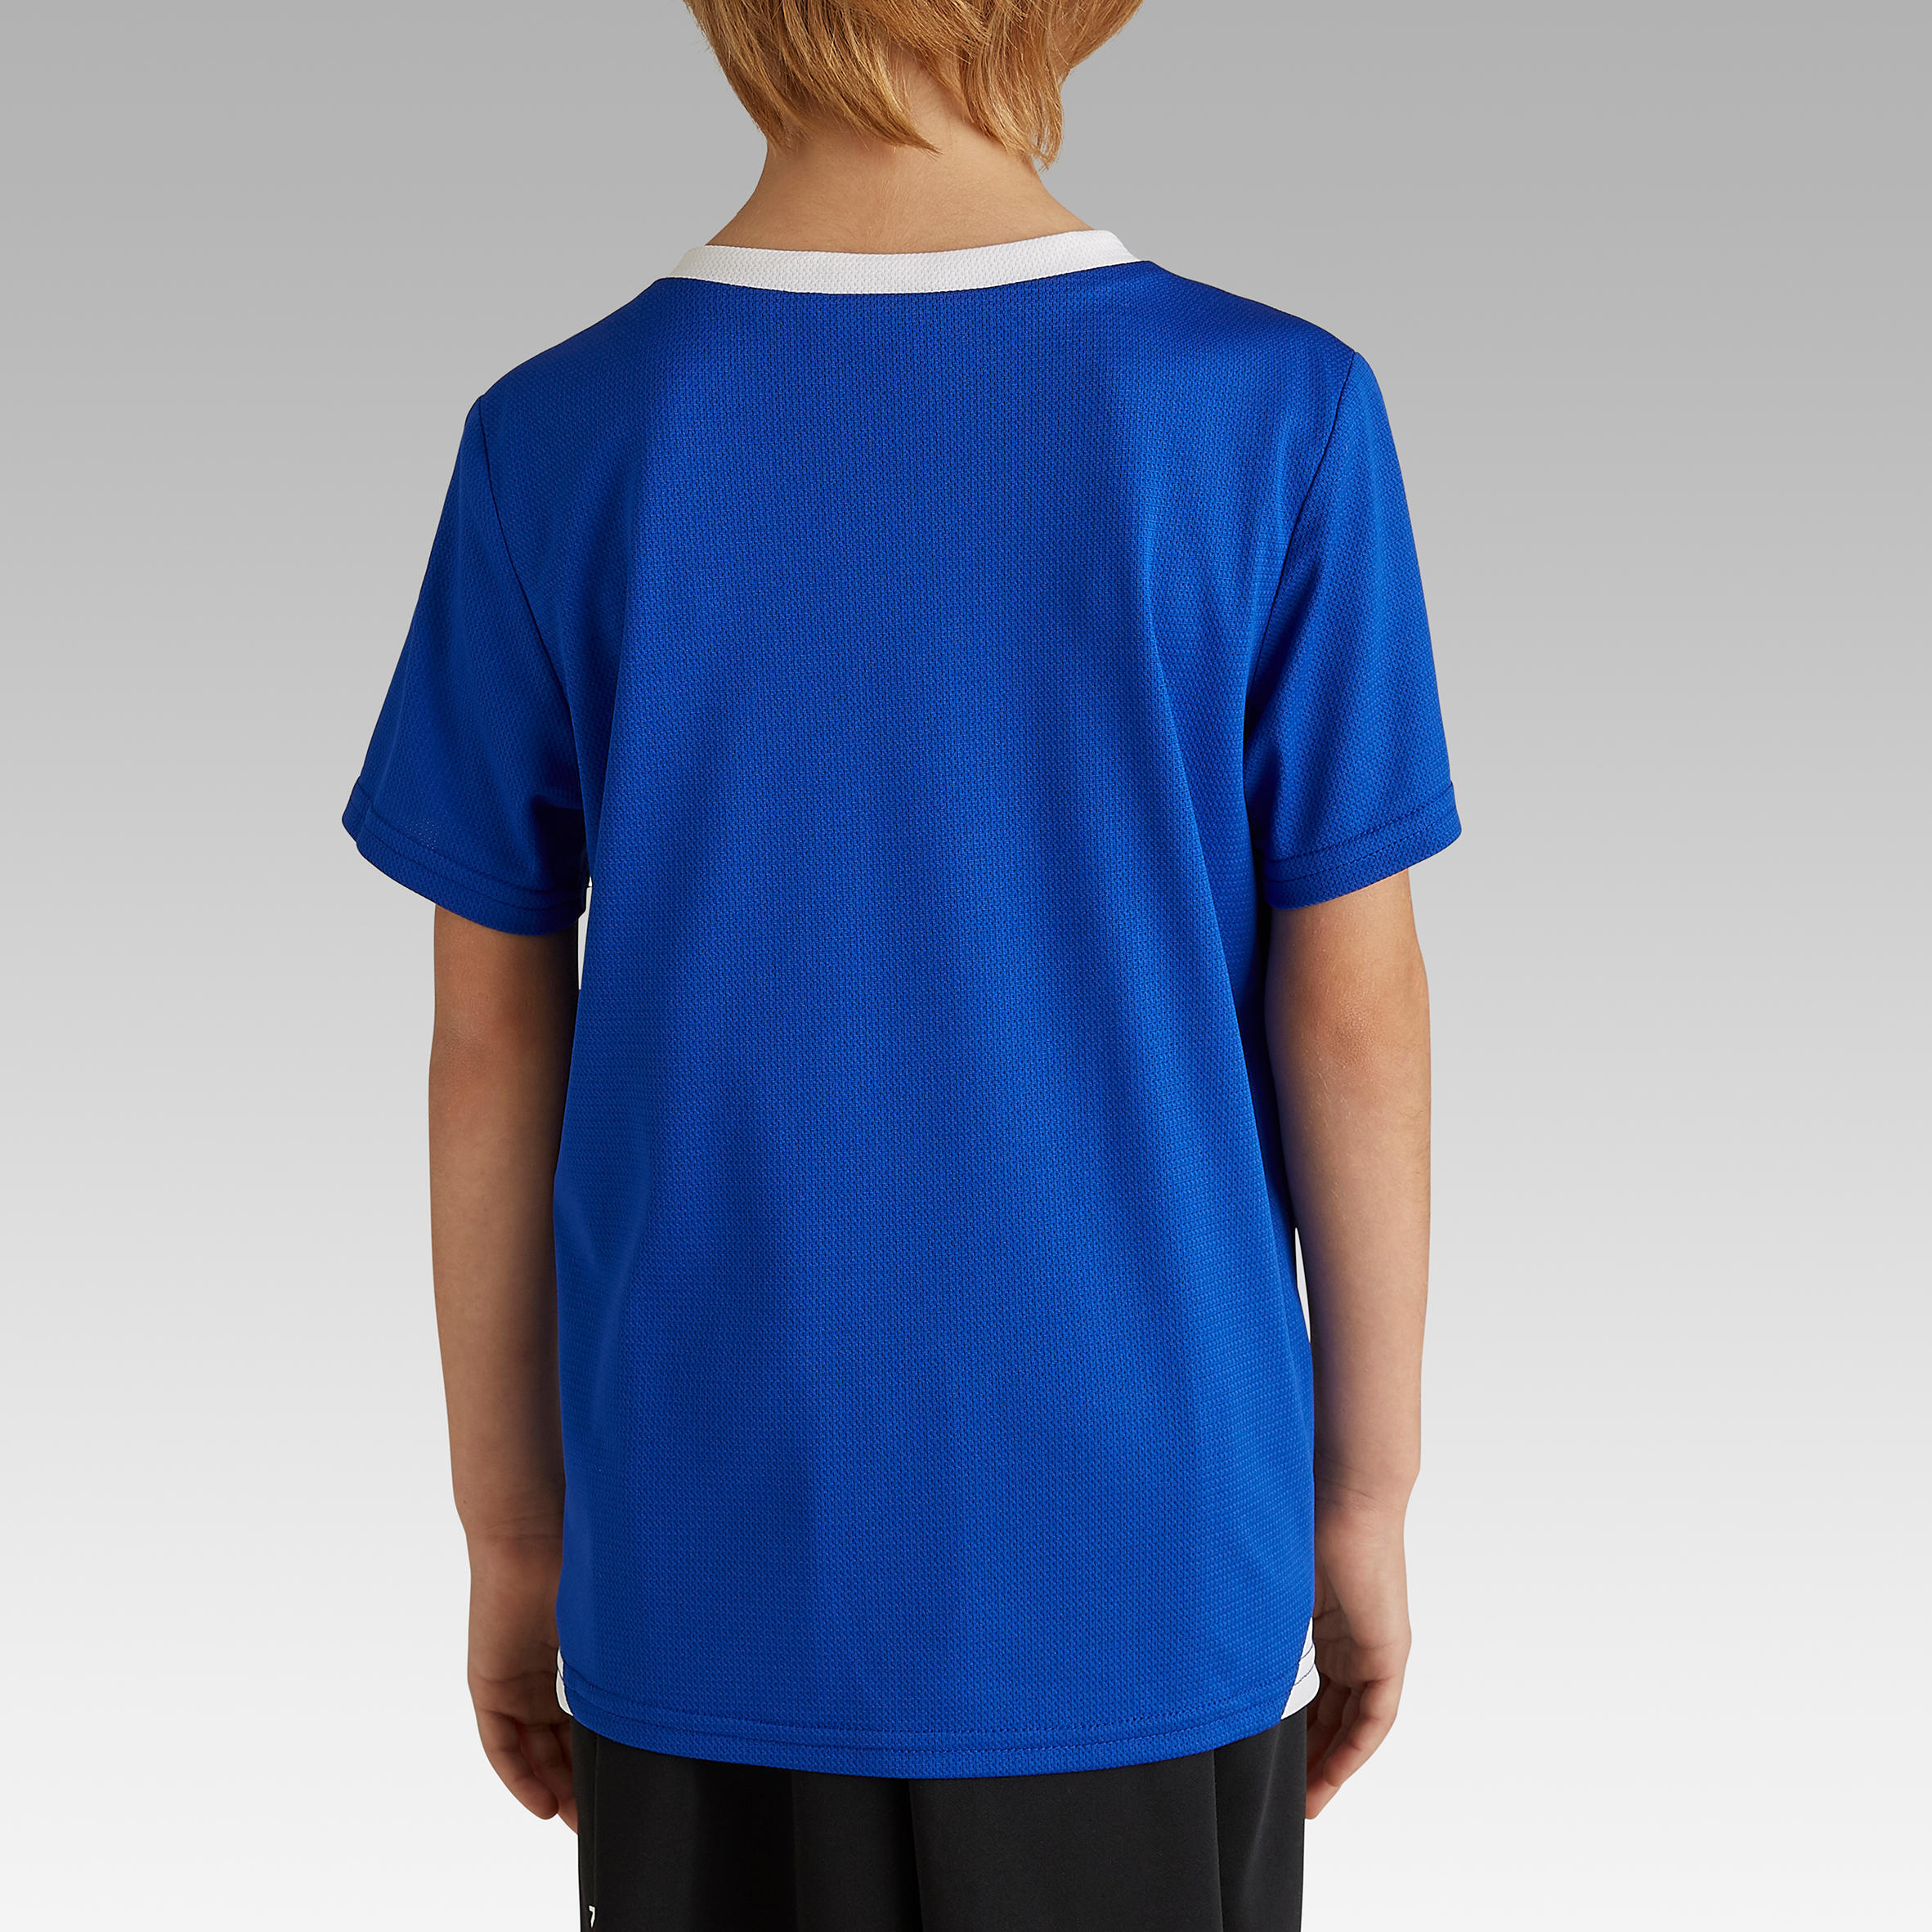 F100 Kids' Football Shirt - Indigo Blue 4/8